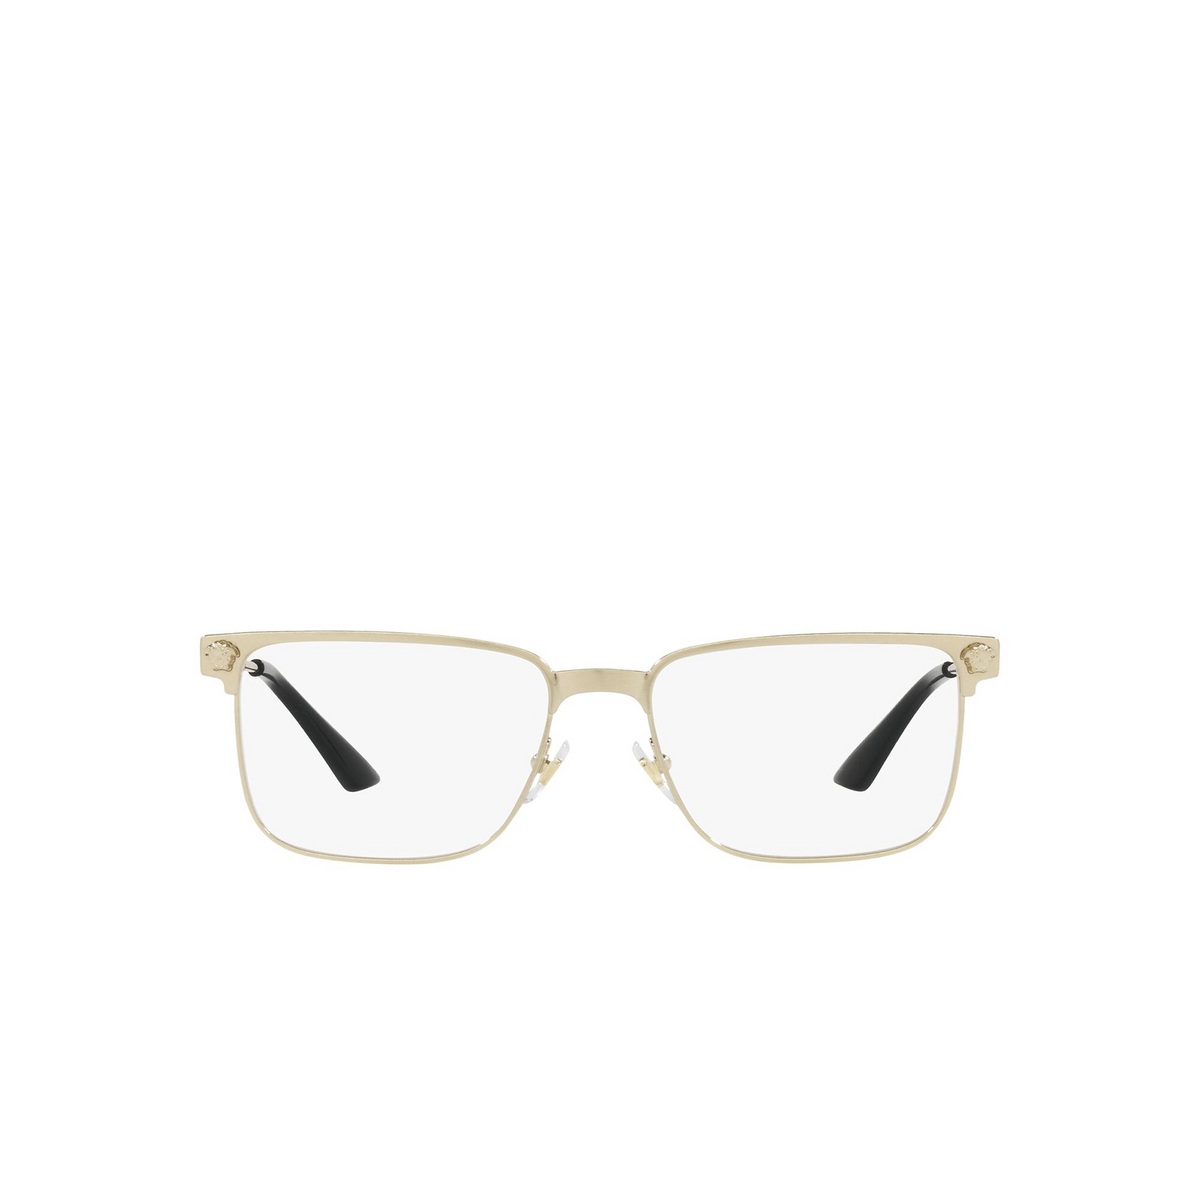 Versace® Rectangle Eyeglasses: VE1276 color Brushed Pale Gold 1339 - front view.